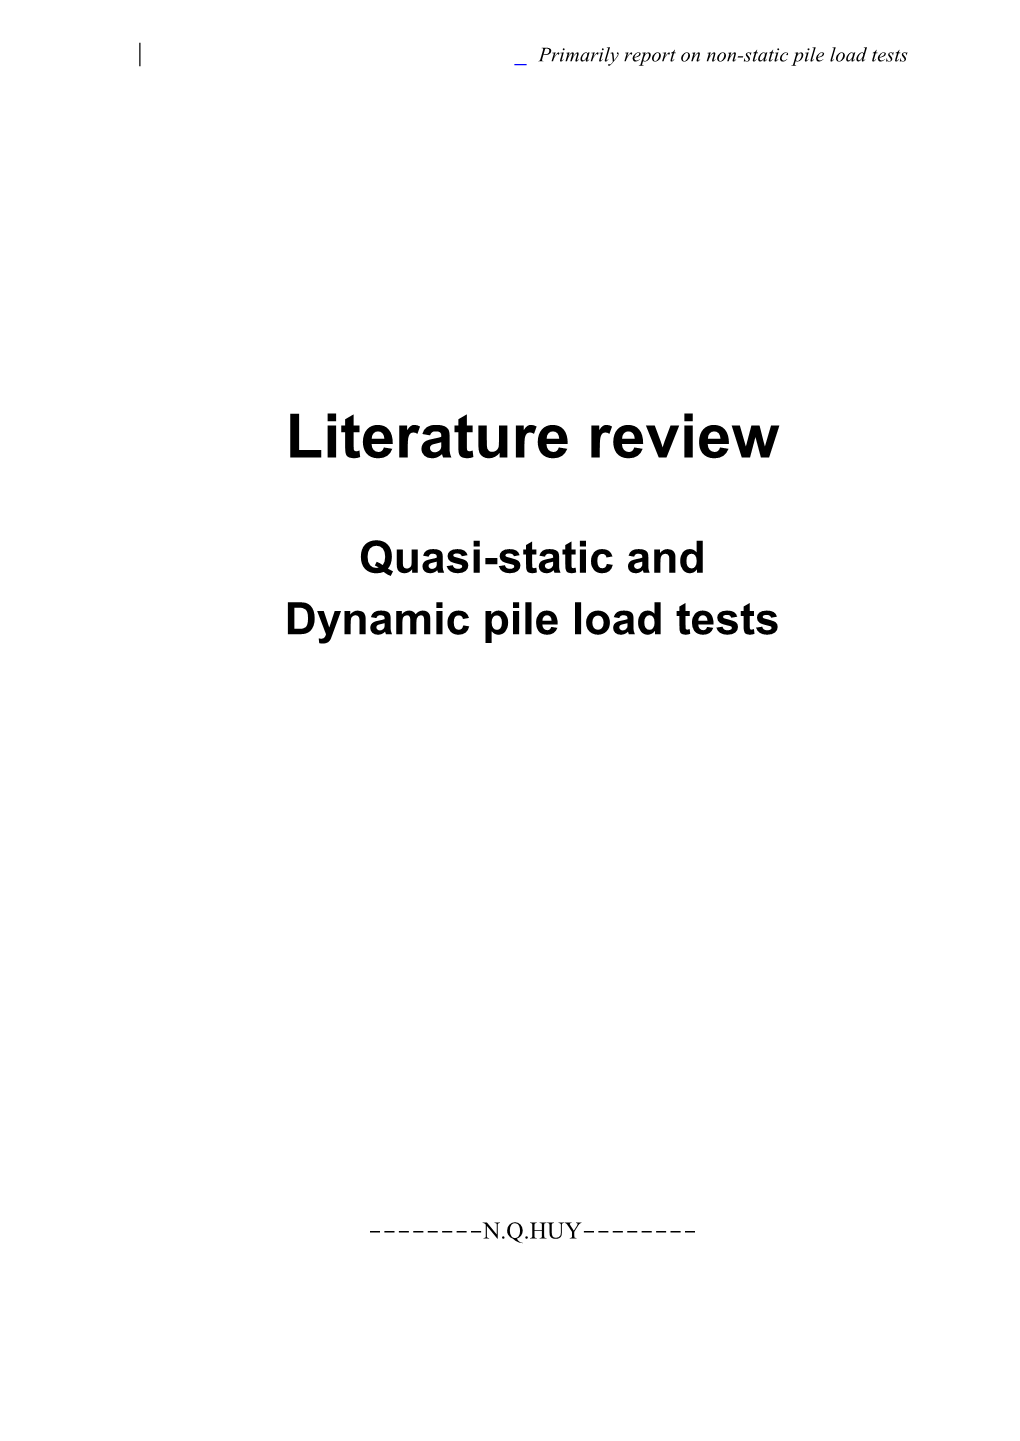 Quasi-Static and Dynamic Pile Load Tests